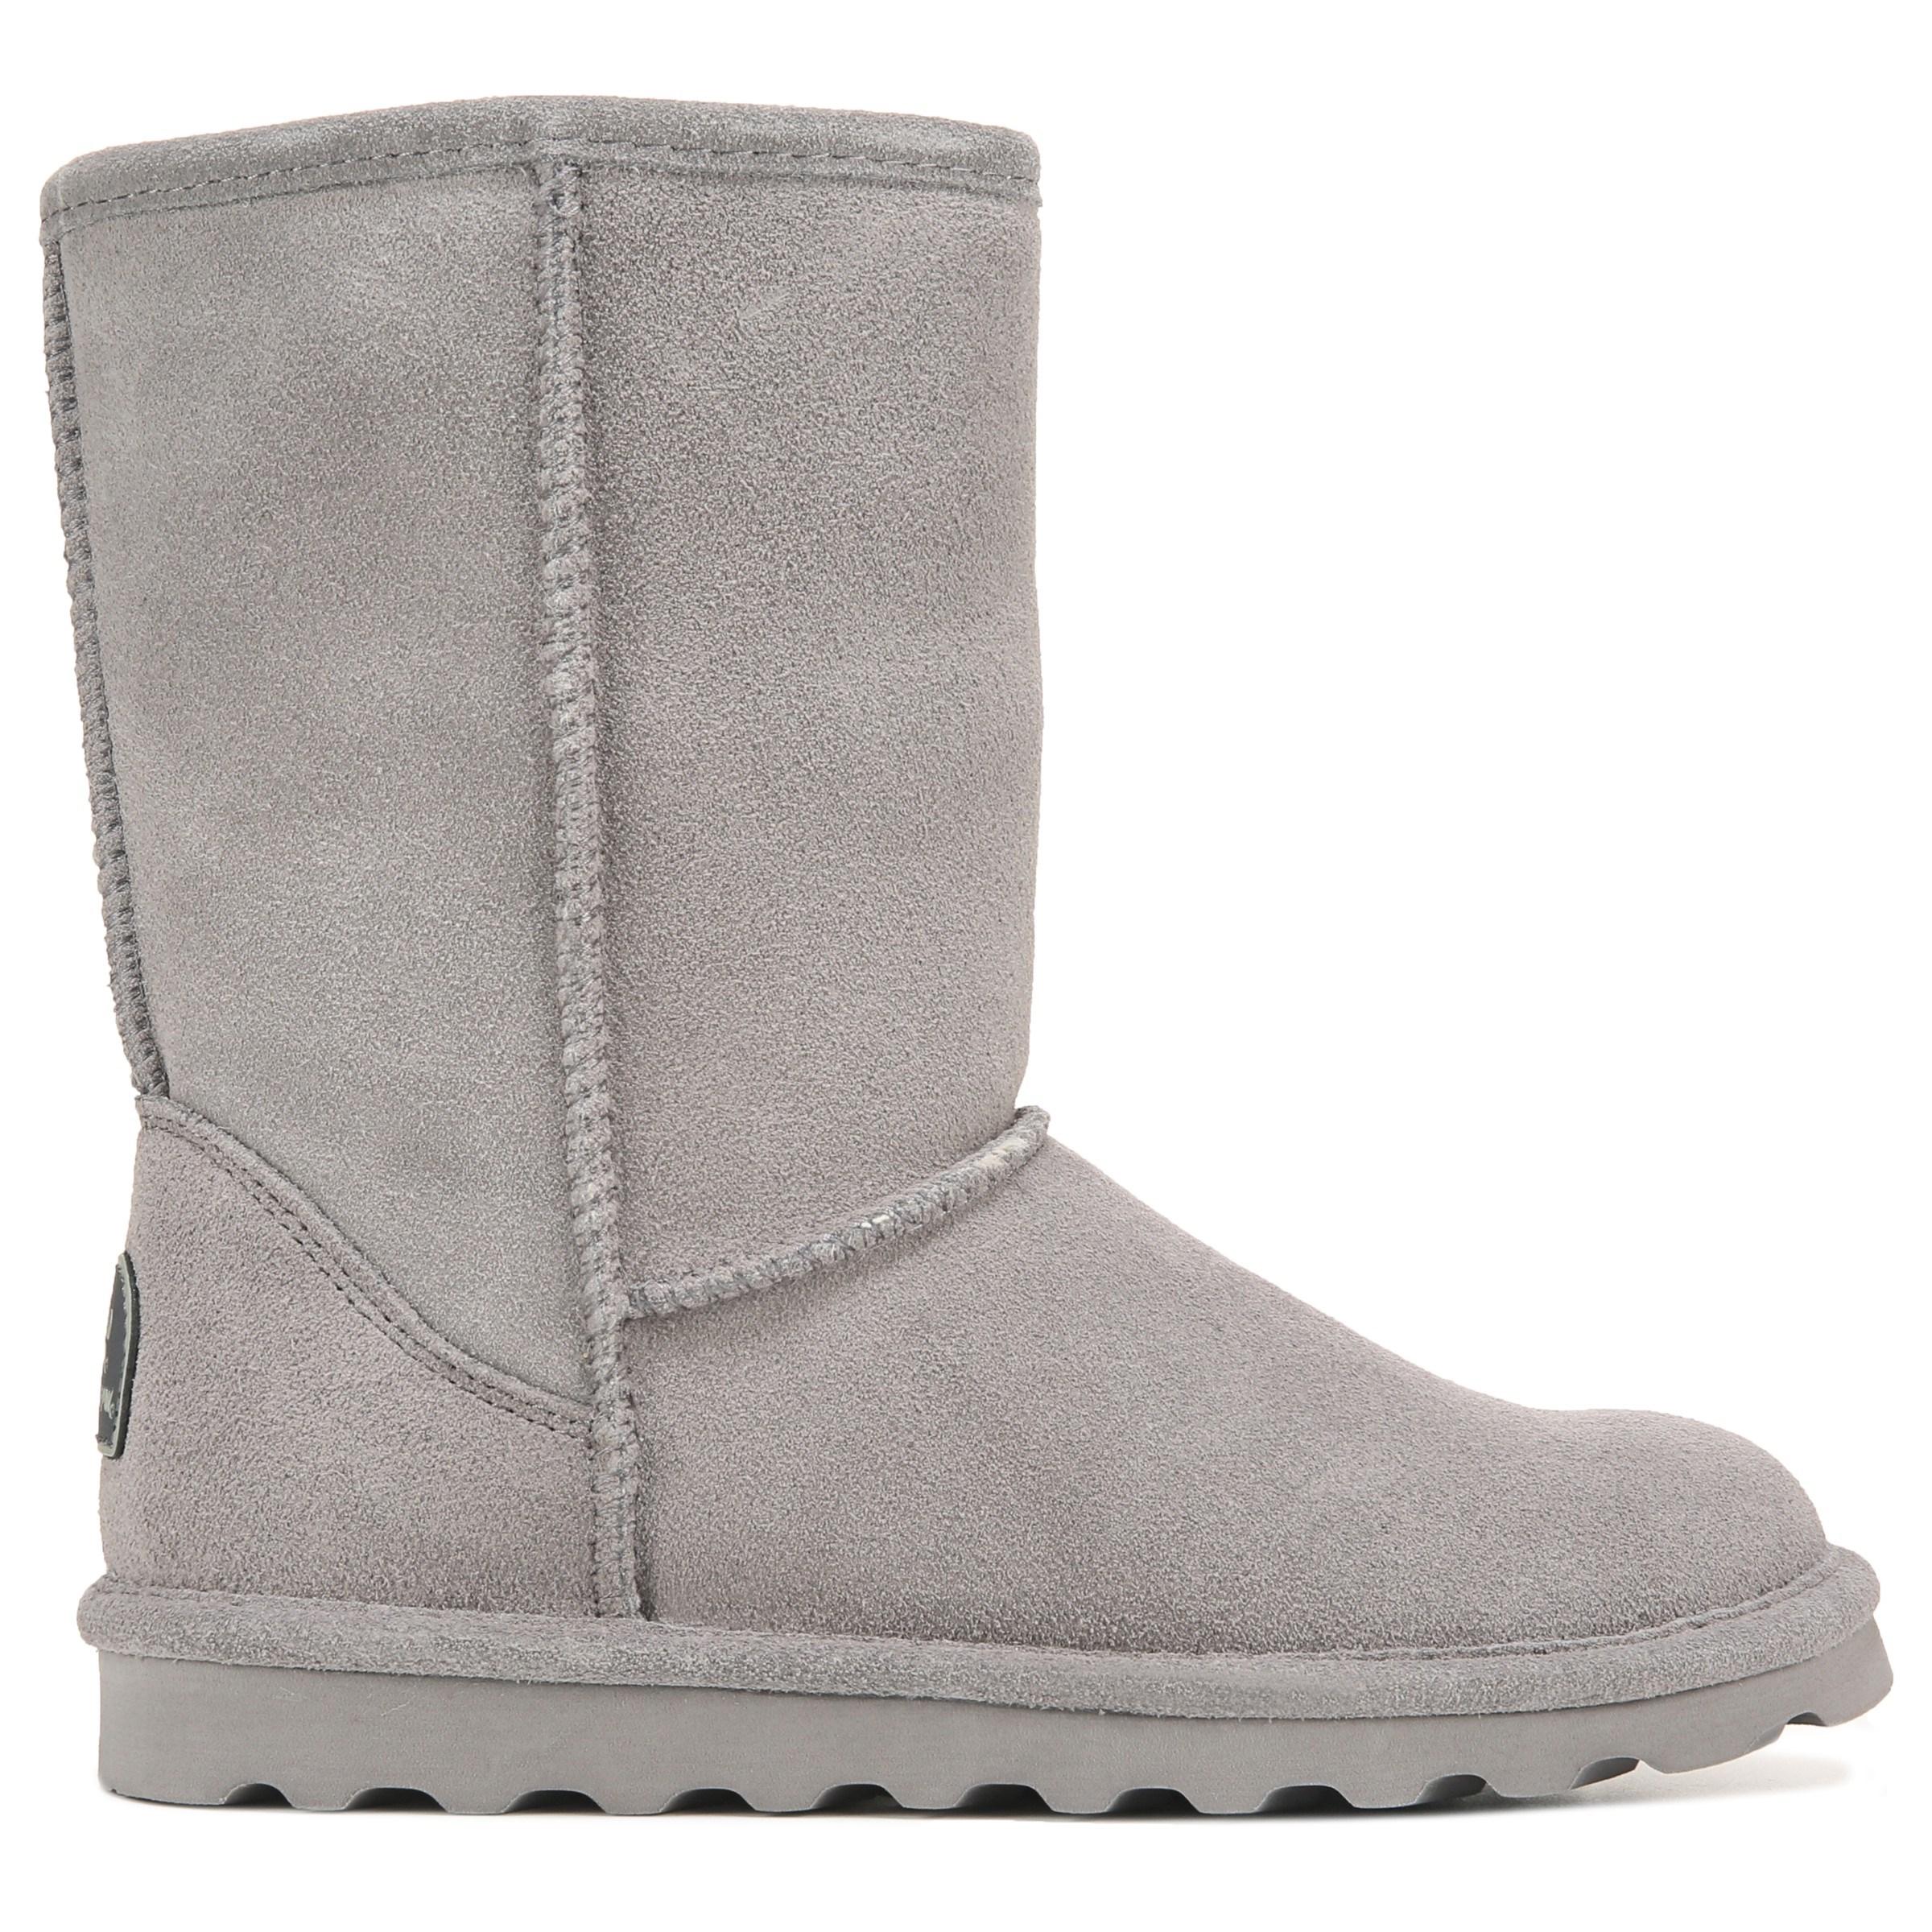 BEARPAW Suede Elle Short Water Resistant Winter Boots in Gray - Lyst